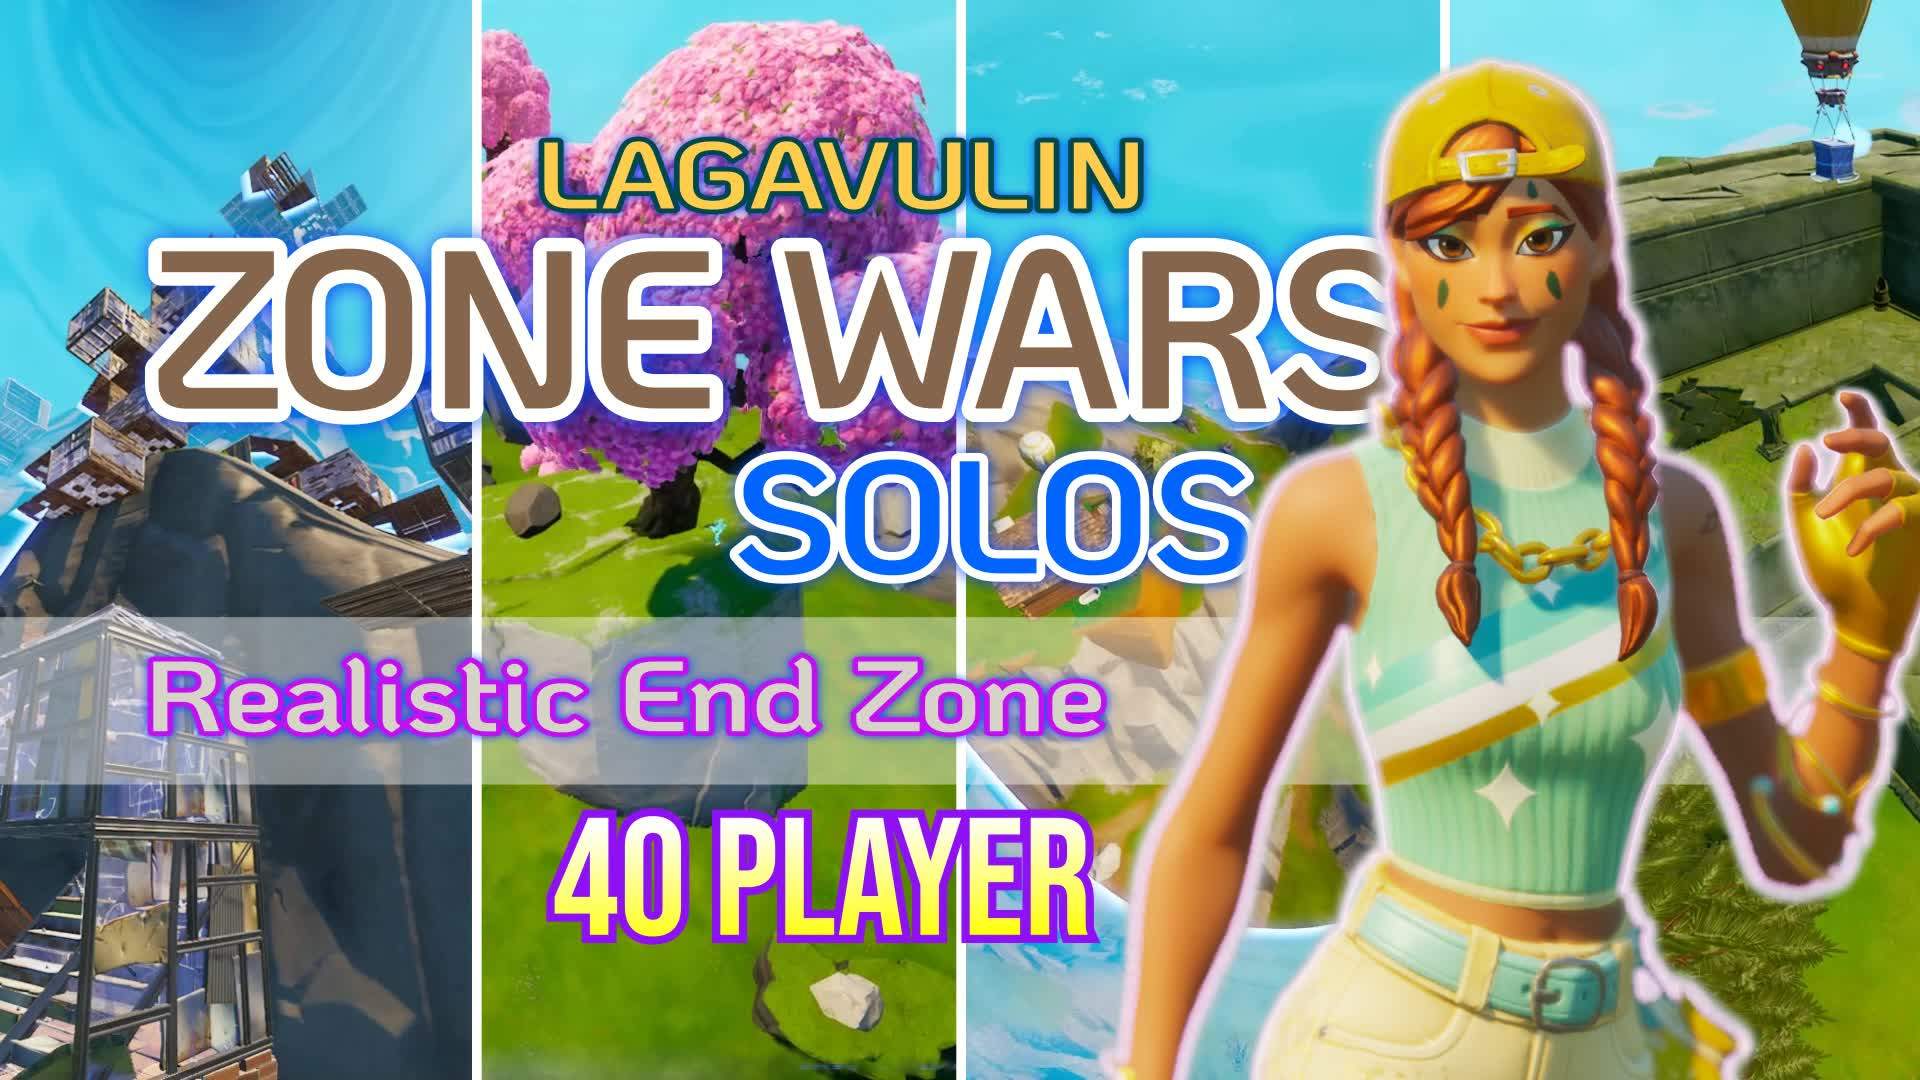 Laga's Zone Wars Solos (40 Player)